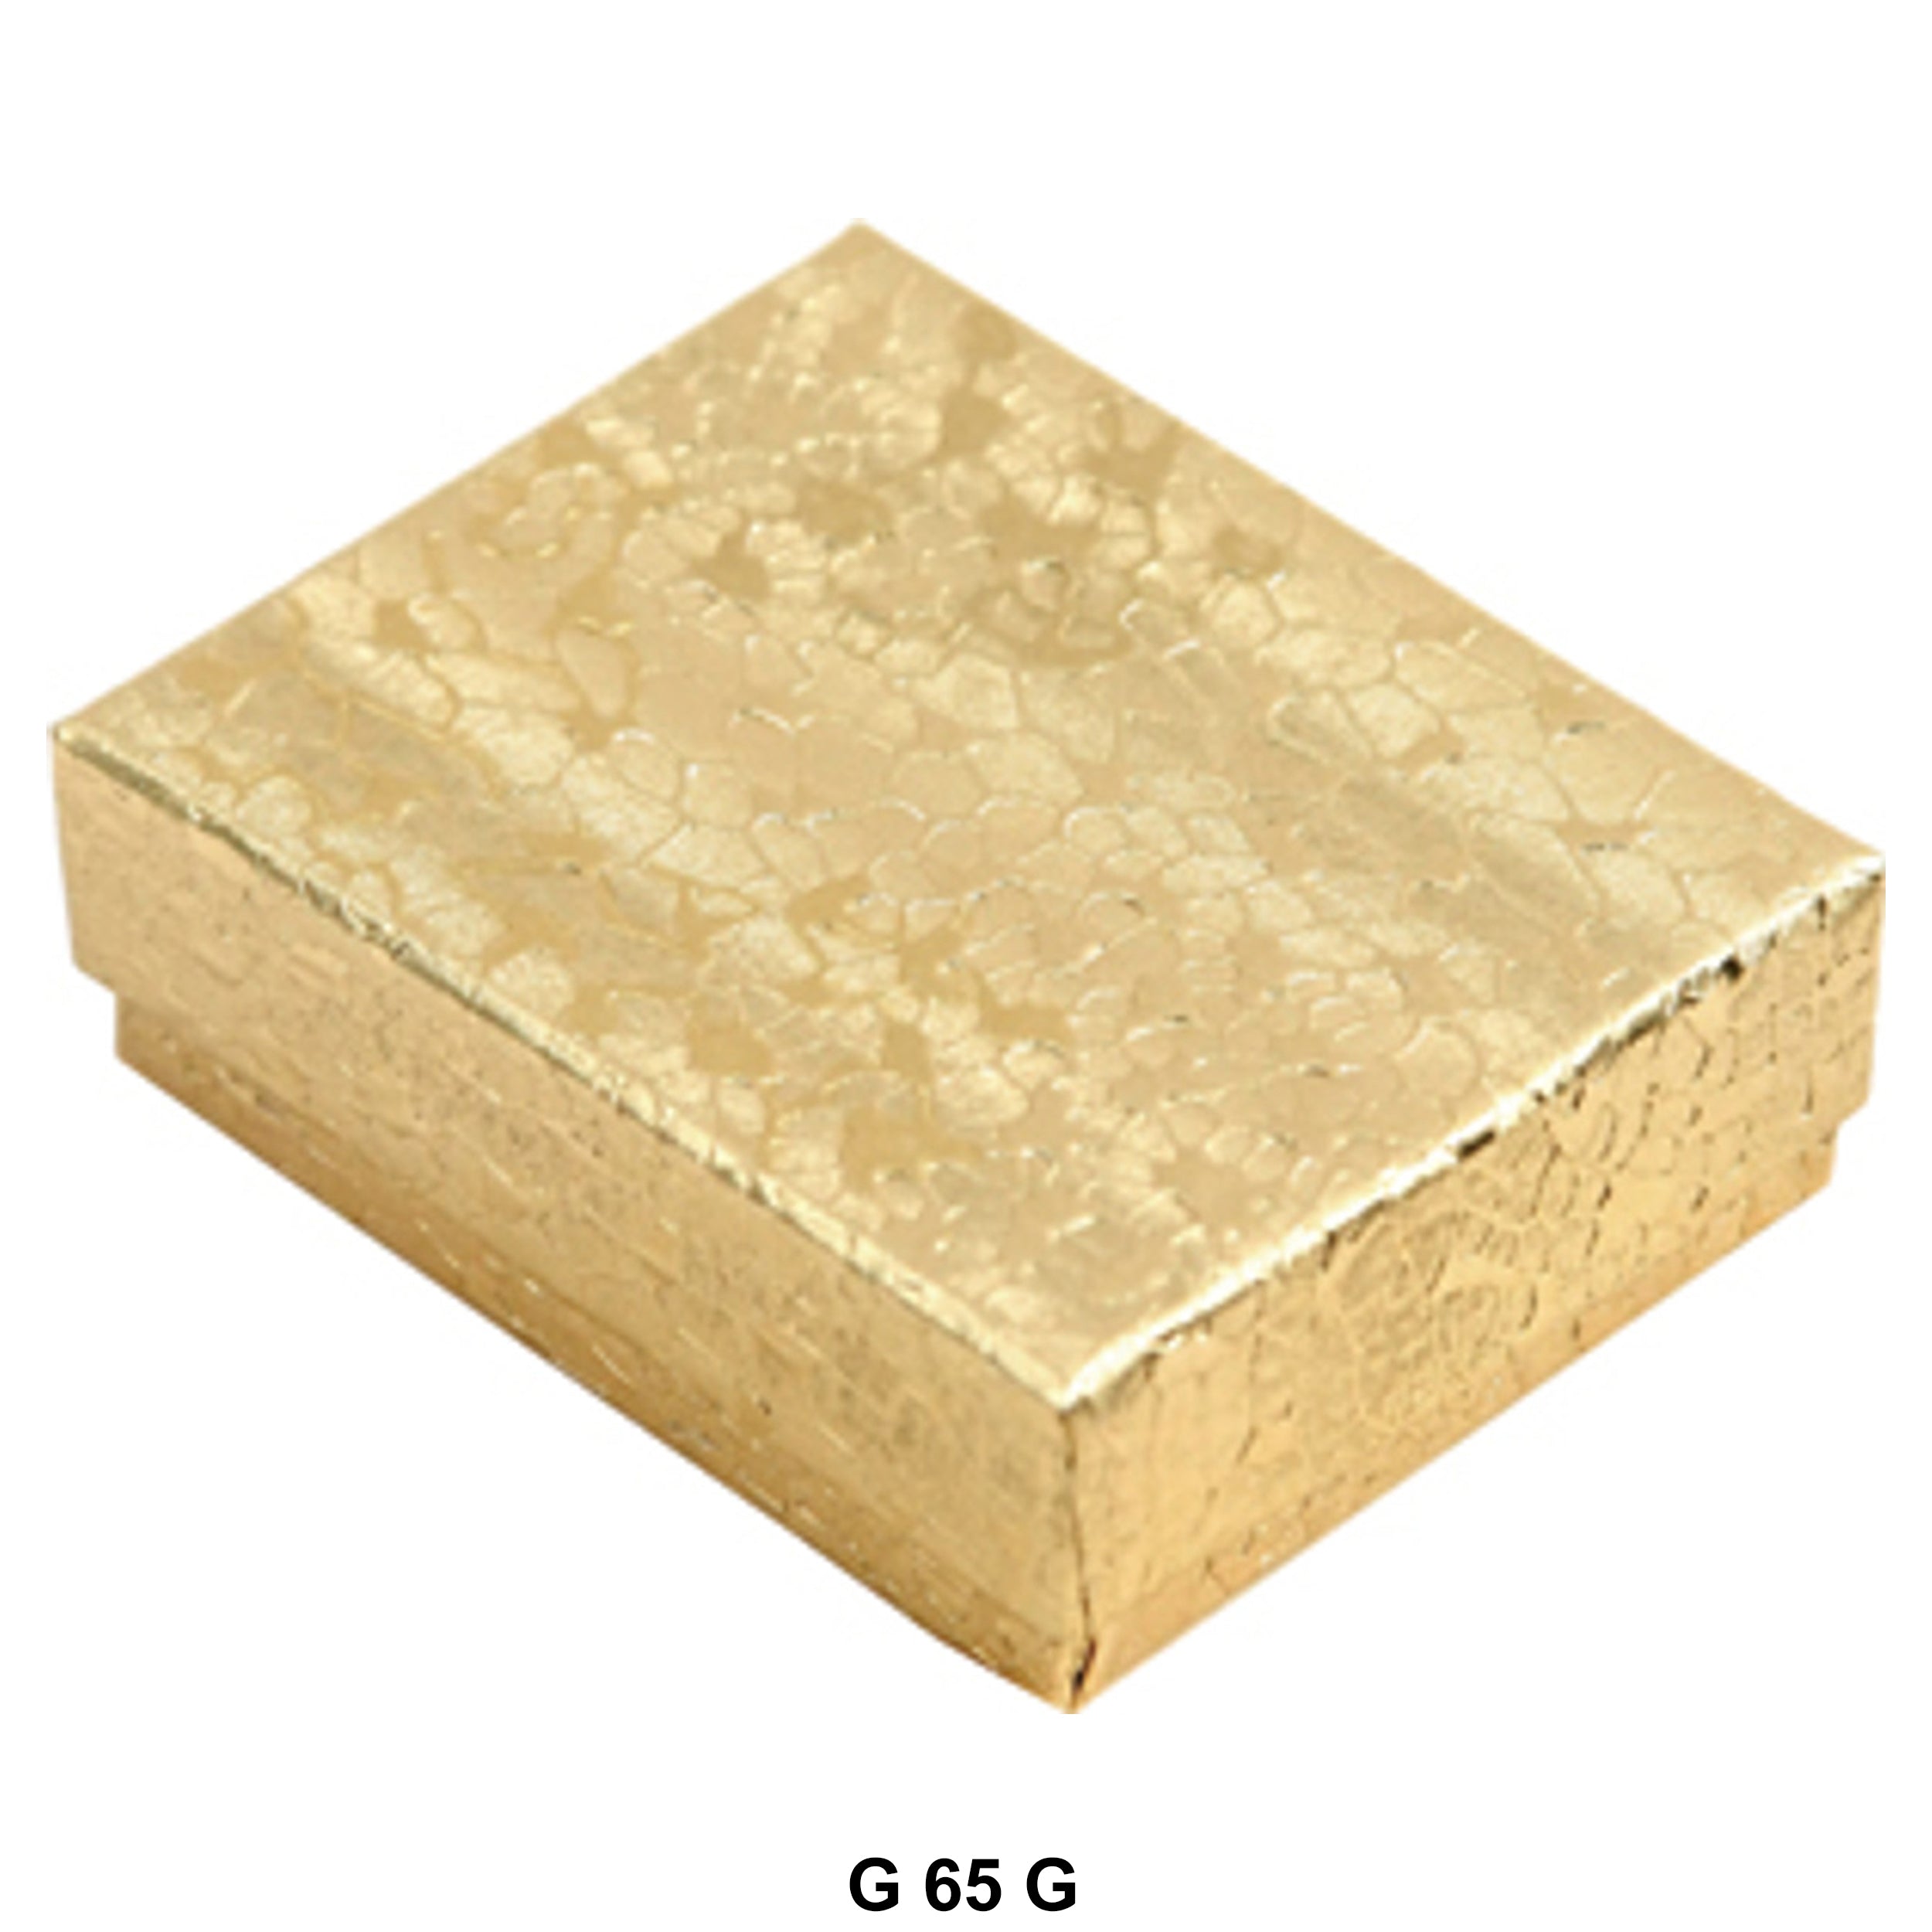 Cotton Filled Box G 65 G (100 Pcs)